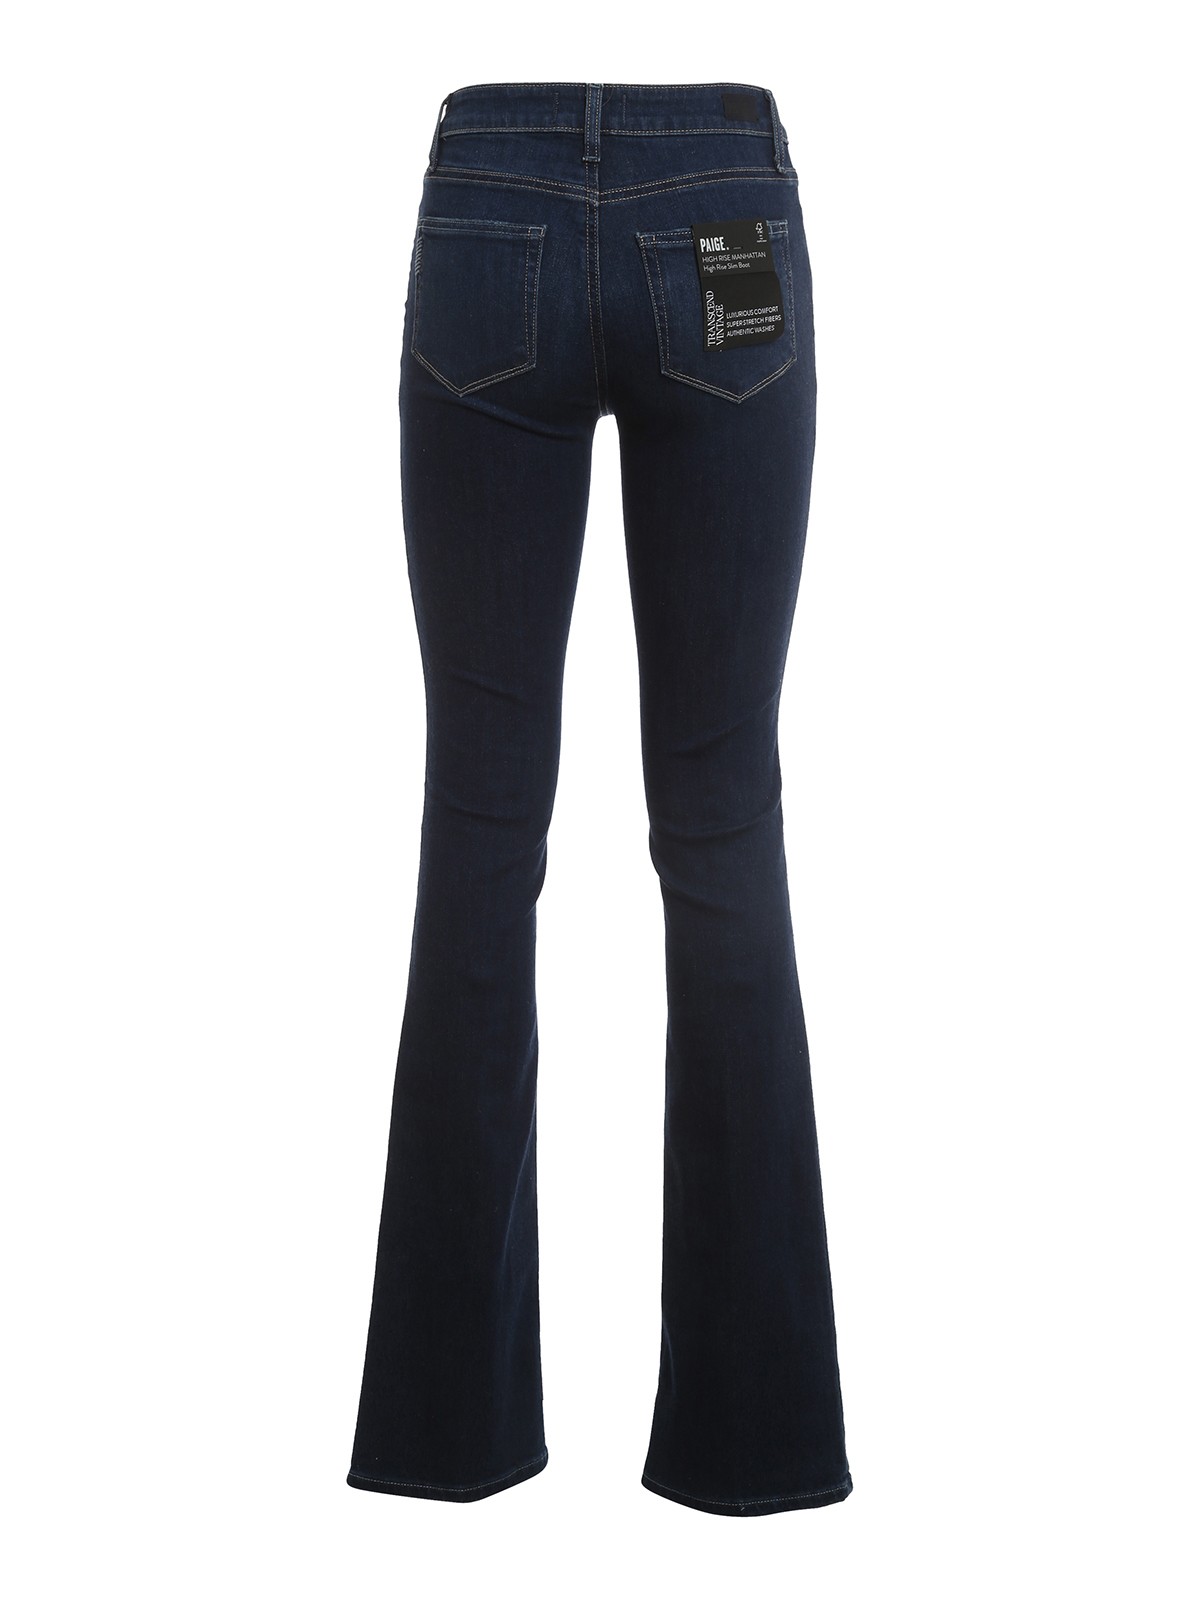 Bootcut jeans Paige - Manhattan high rise jeans - 4108F465206W5206